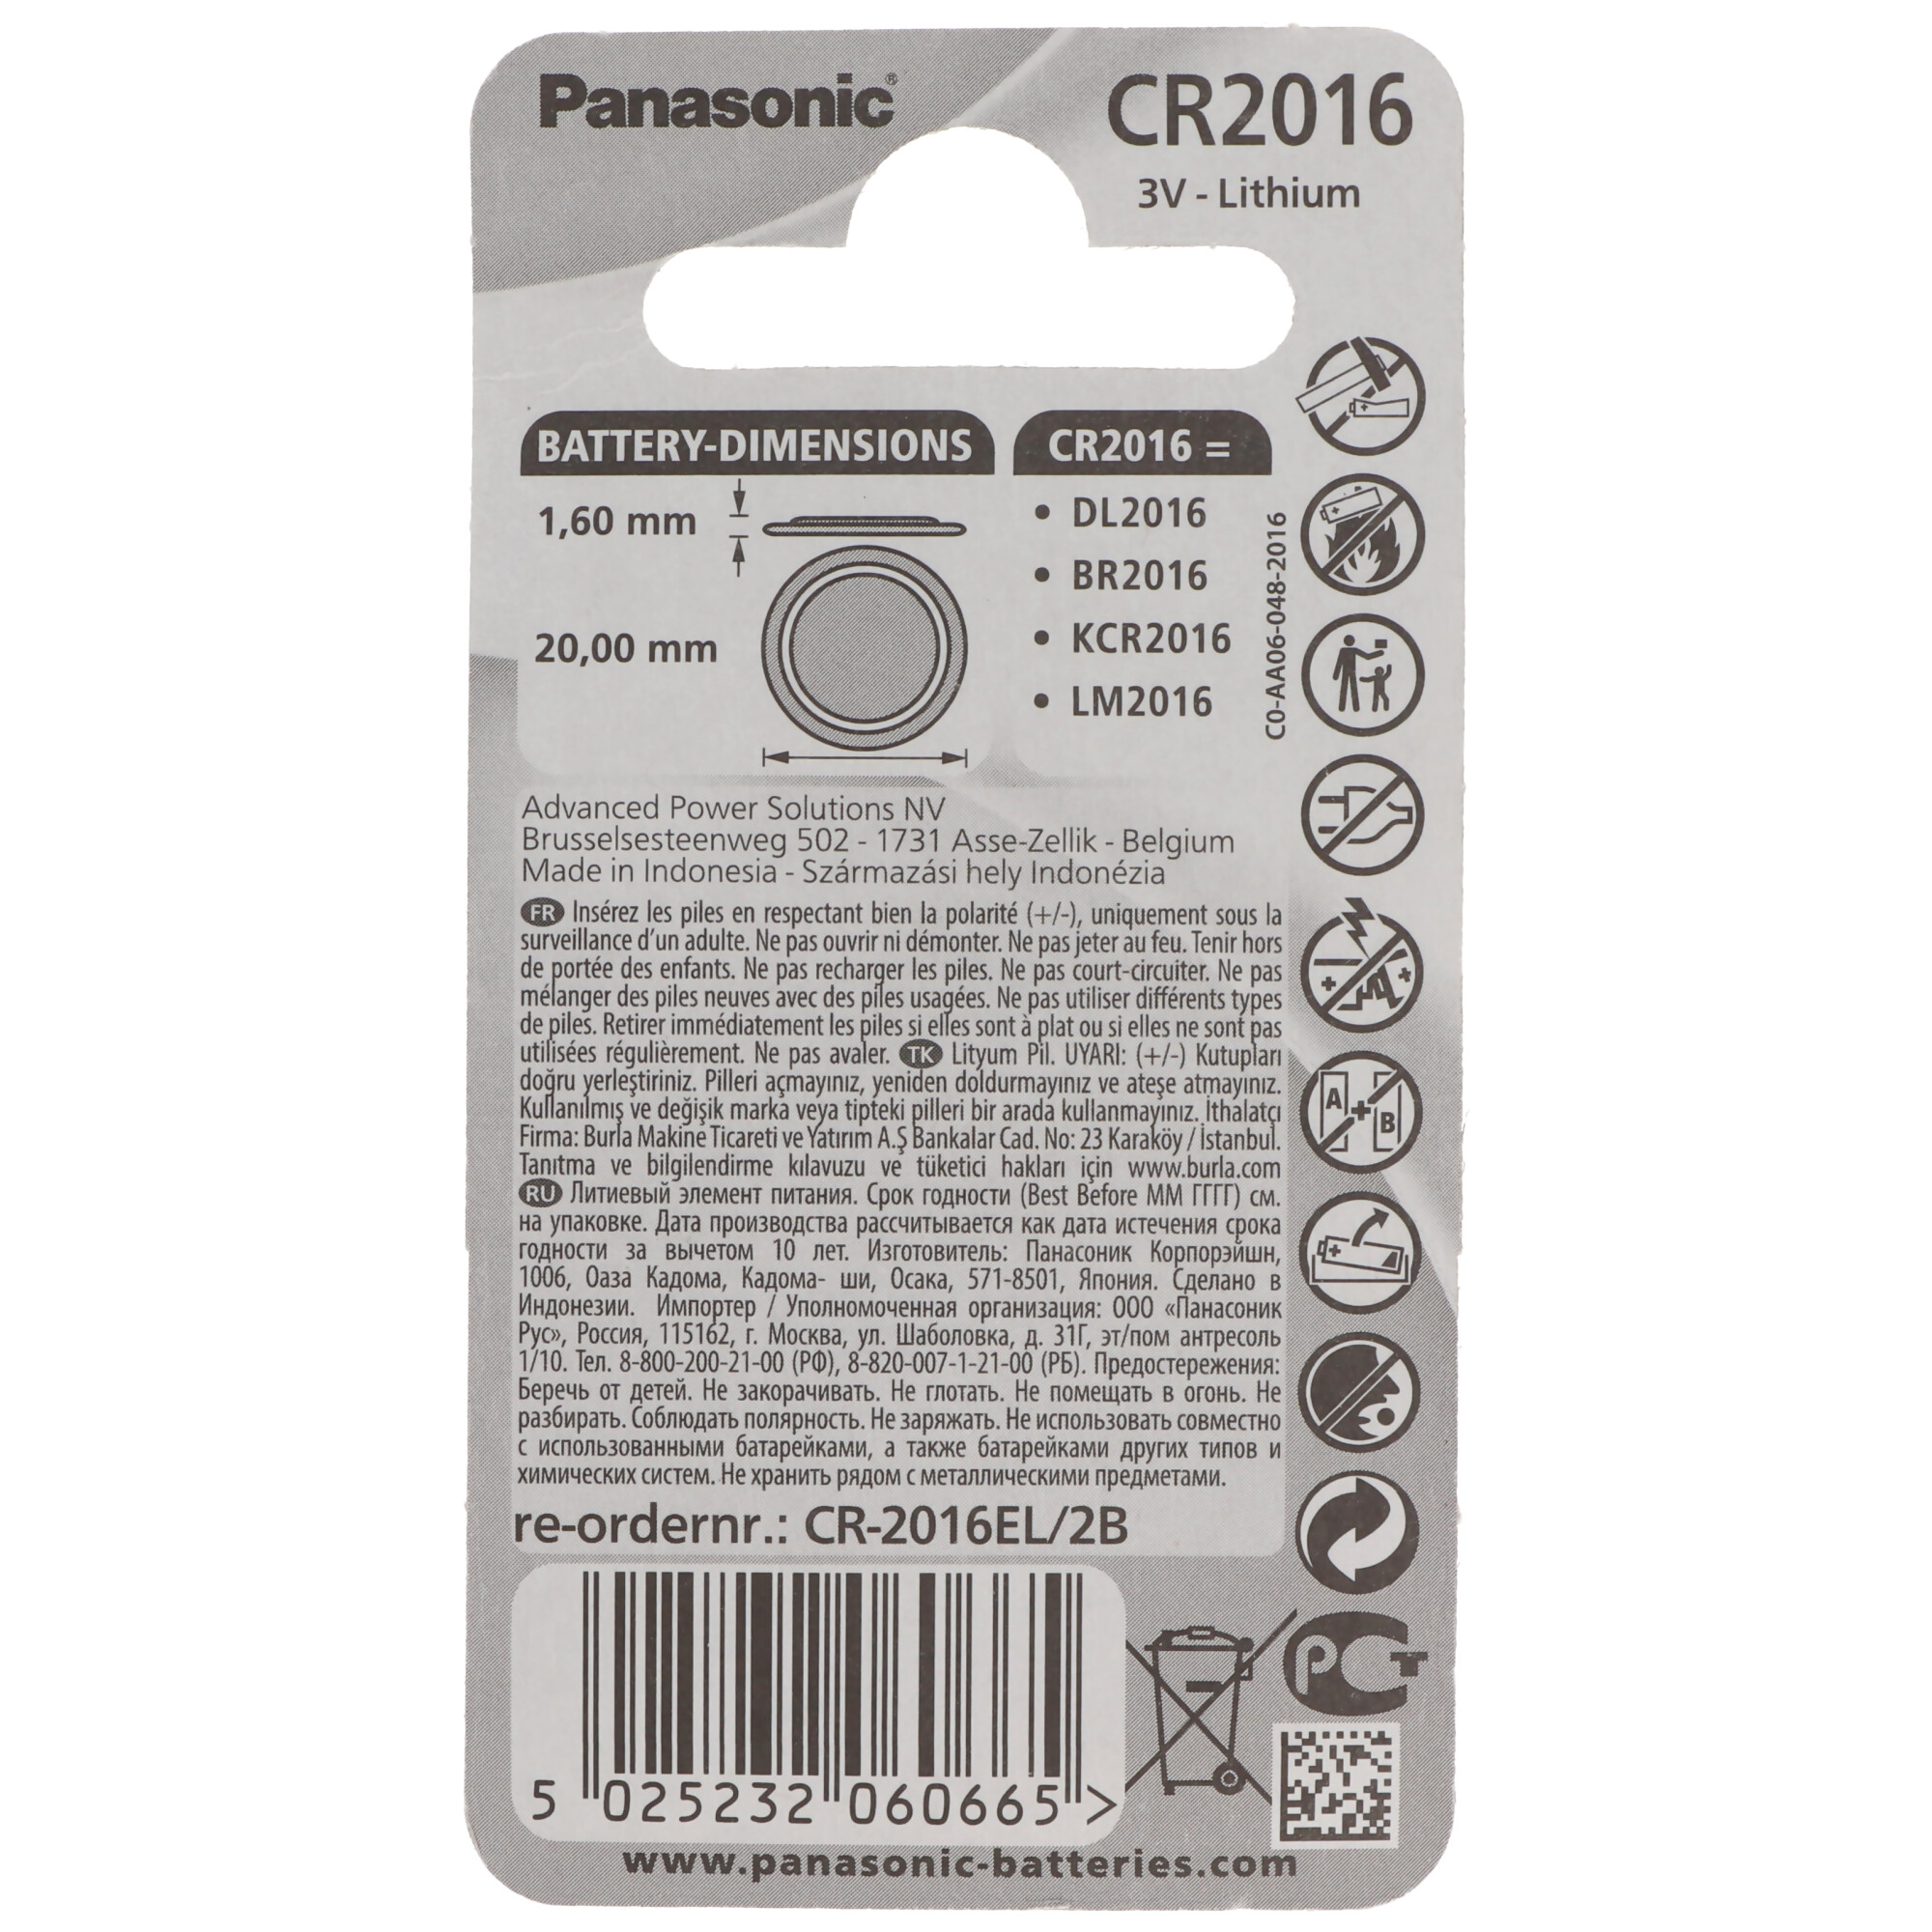 Panasonic Batterie Lithium, Knopfzelle, CR2016, 3V Electronics, Lithium Power, Retail Blister (2-Pack)